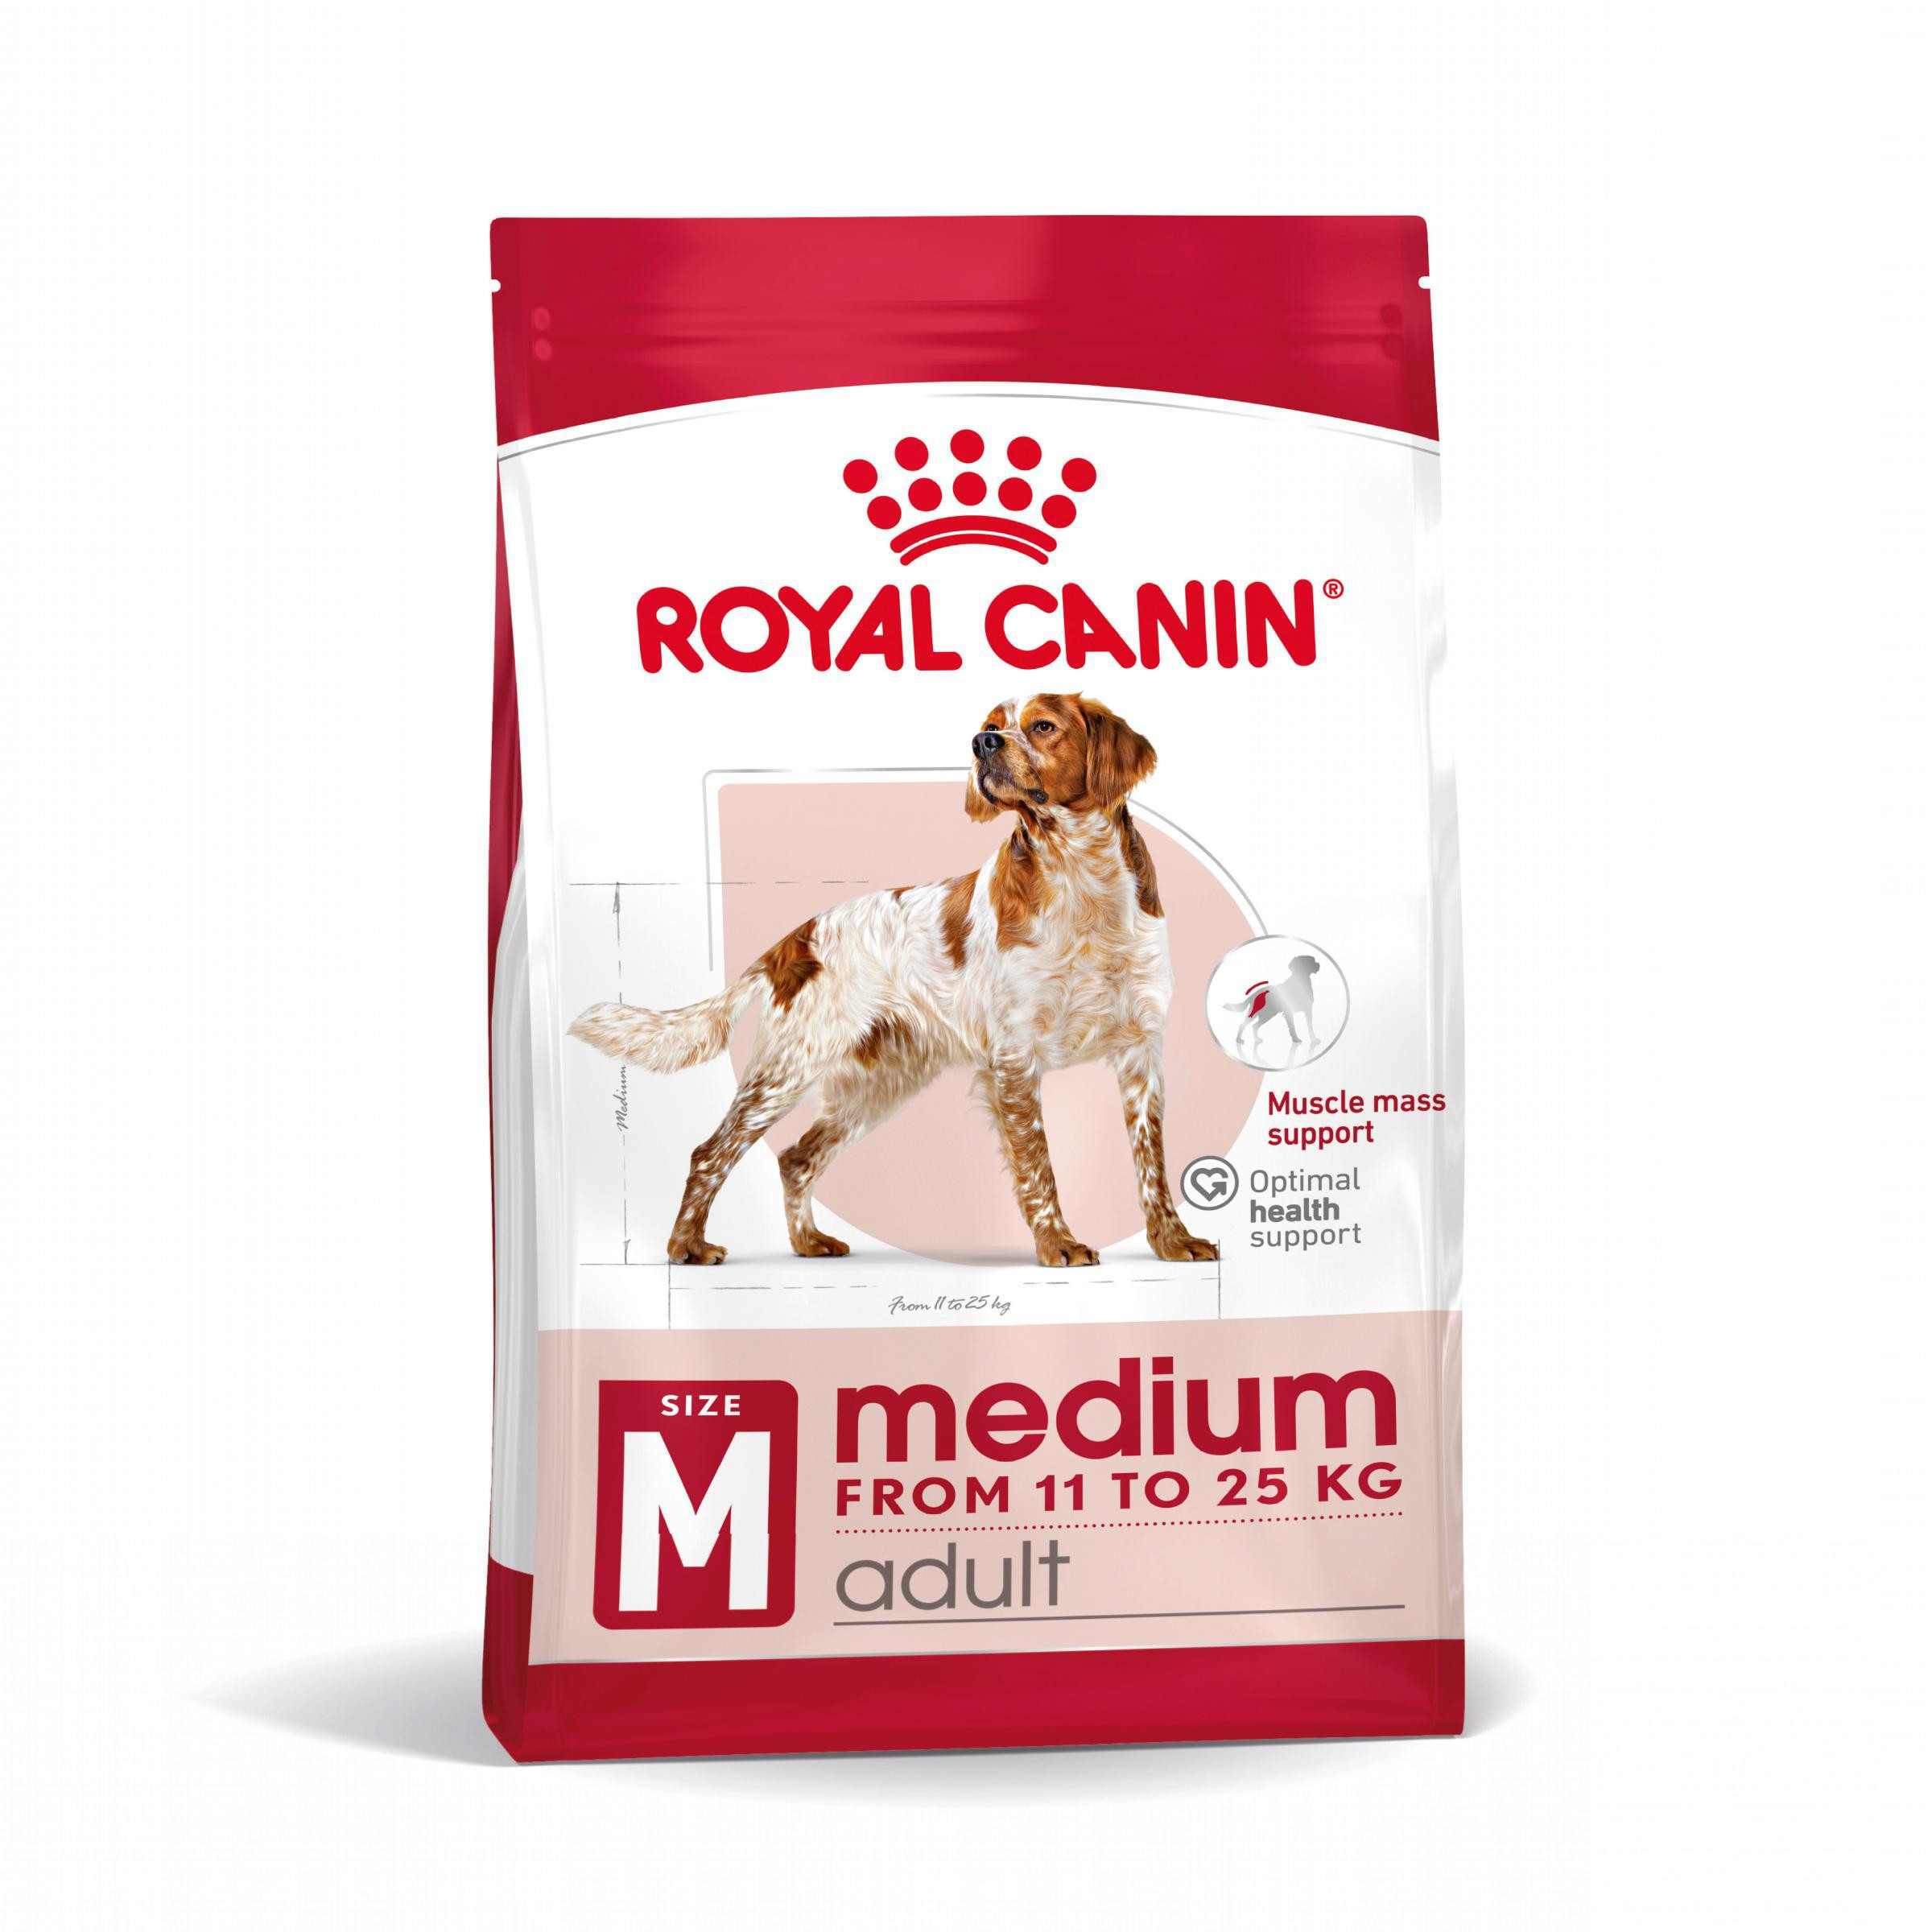 Royal Canin Medium Adult per cane